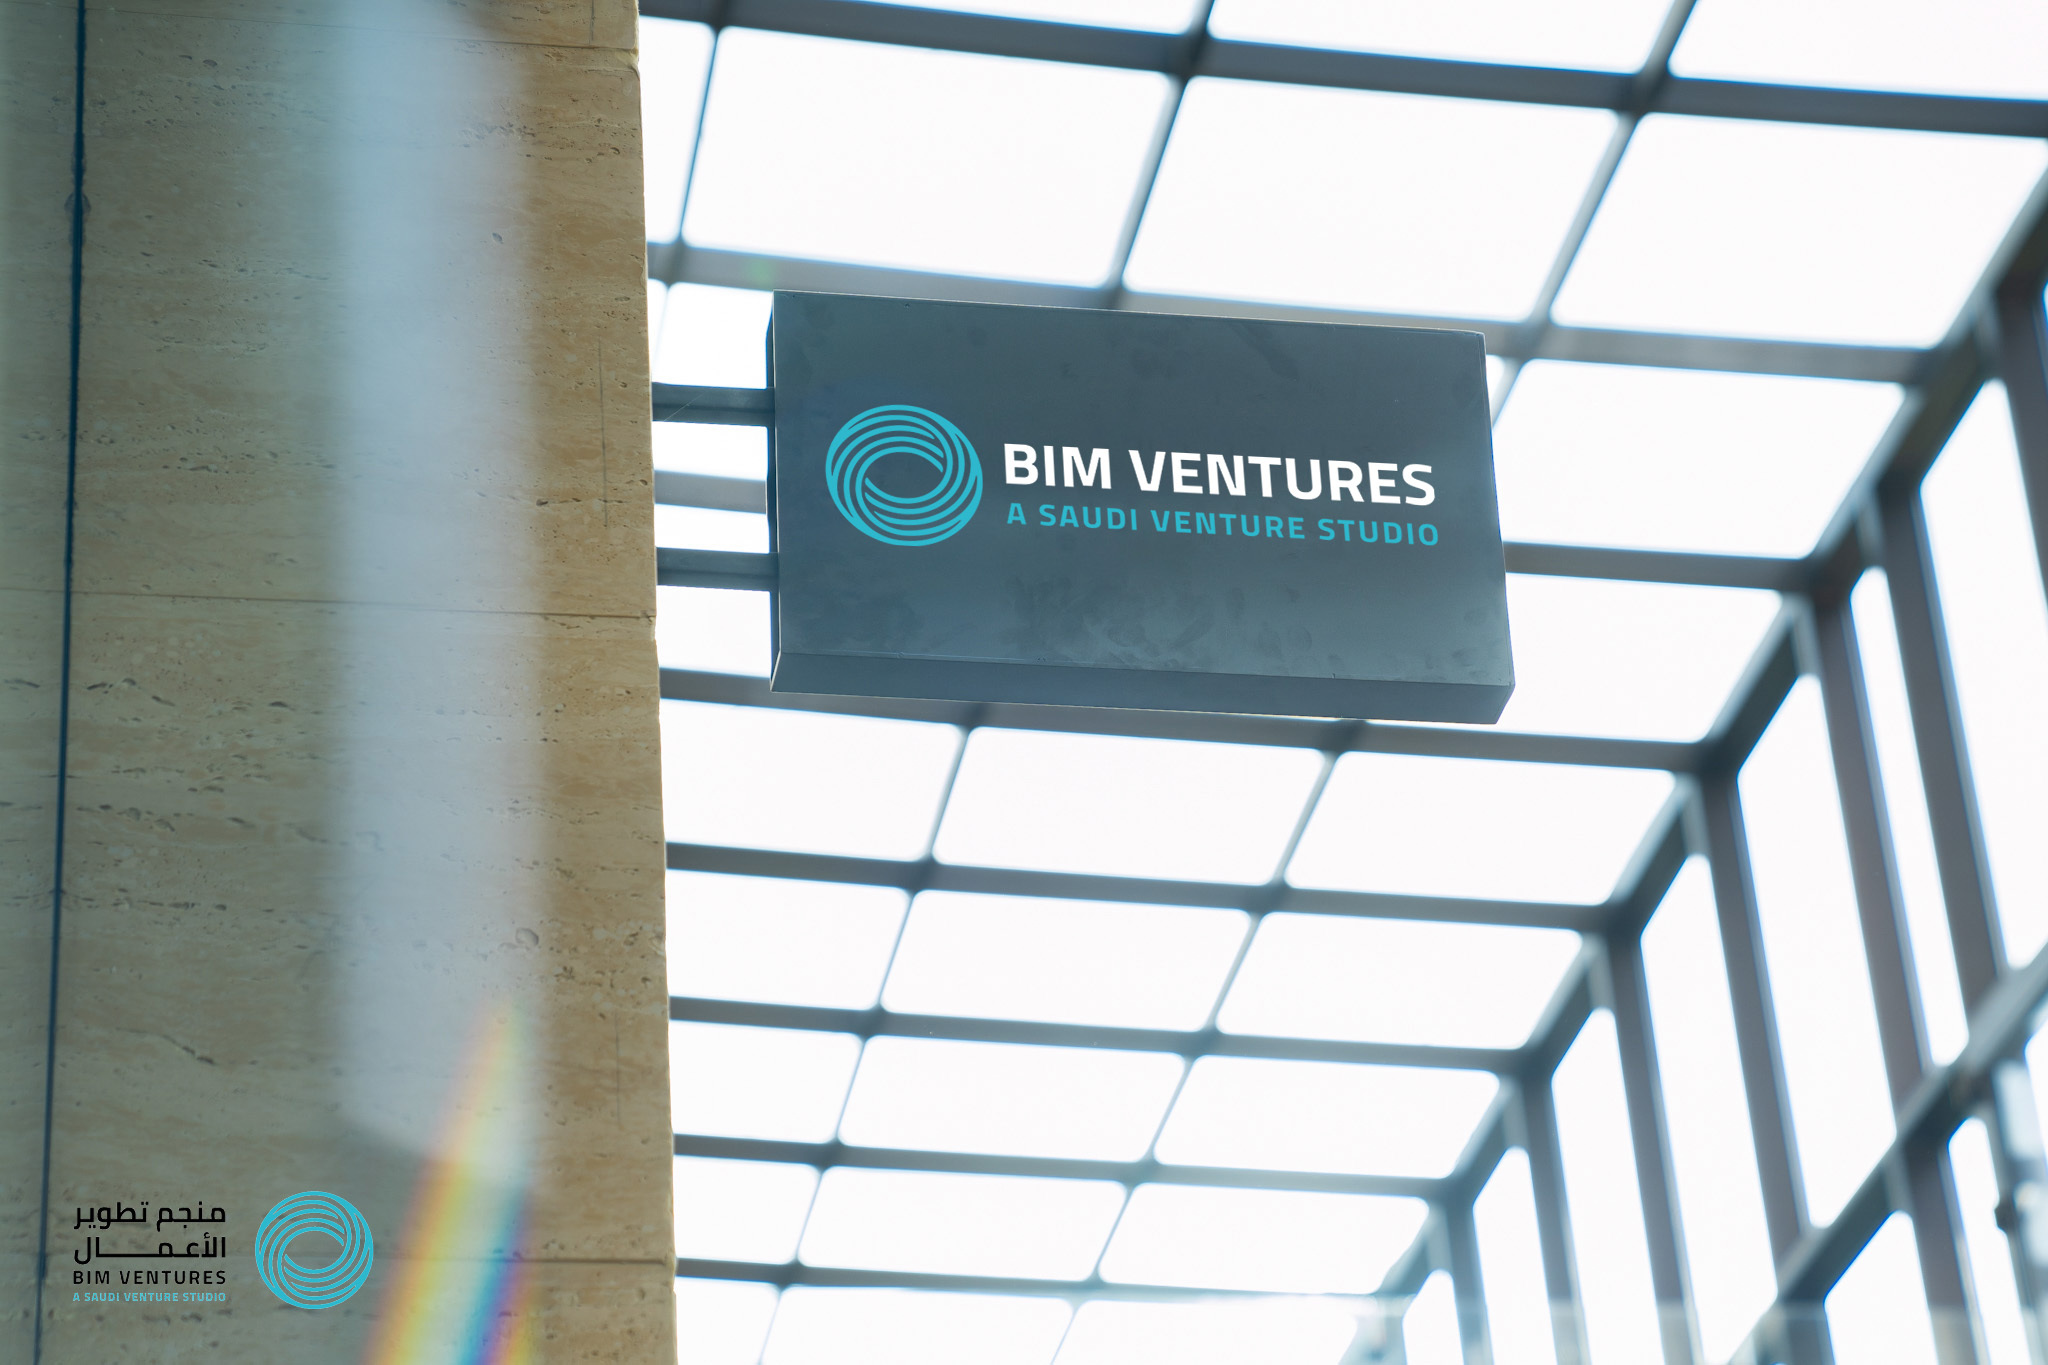 SBI Holdings and BIM Ventures Spearhead Strategic Partnership